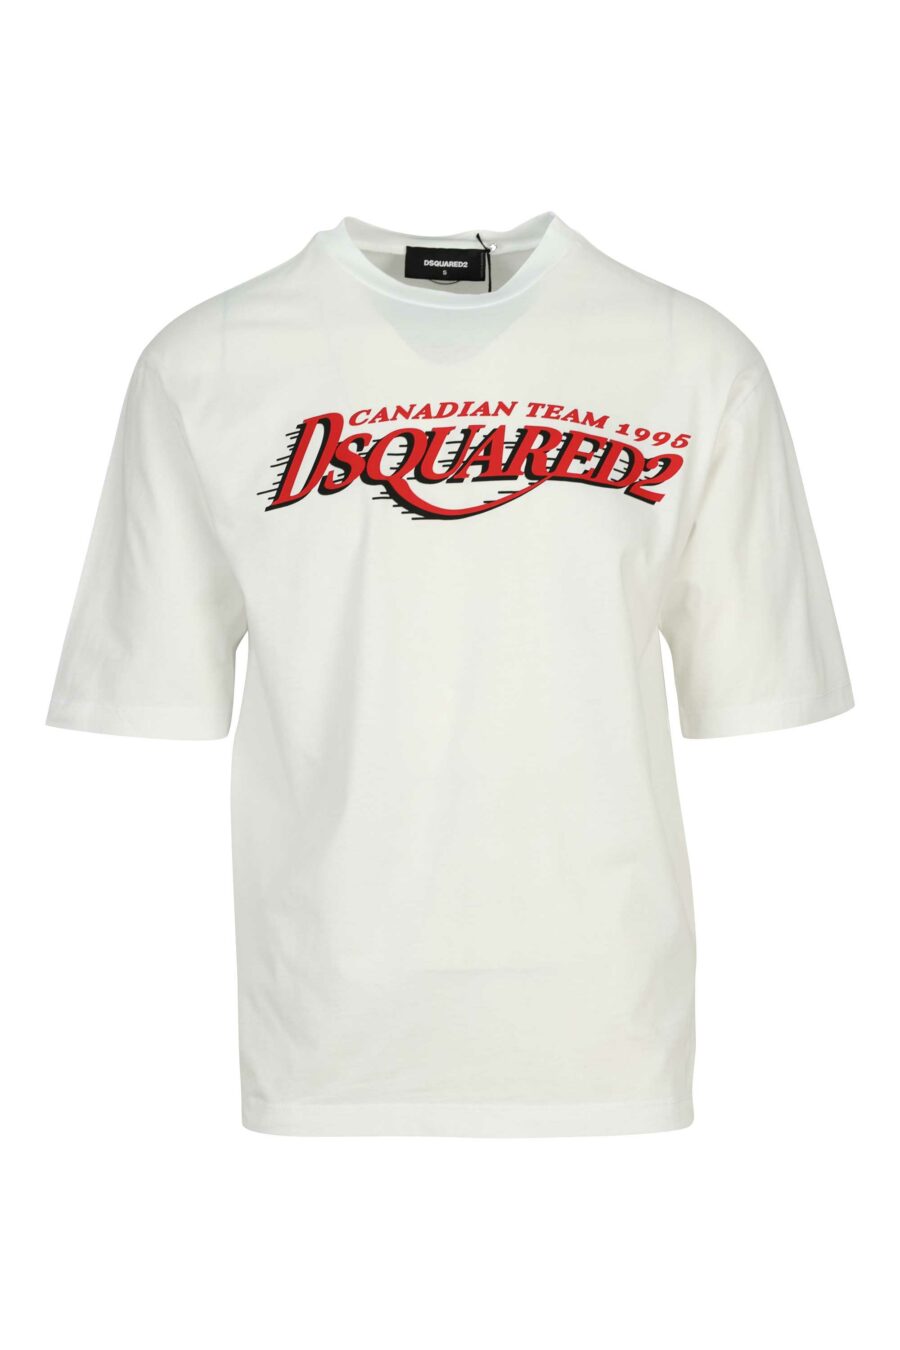 Camiseta blanca con maxilogo "canadian team 1995" - 8054148301507